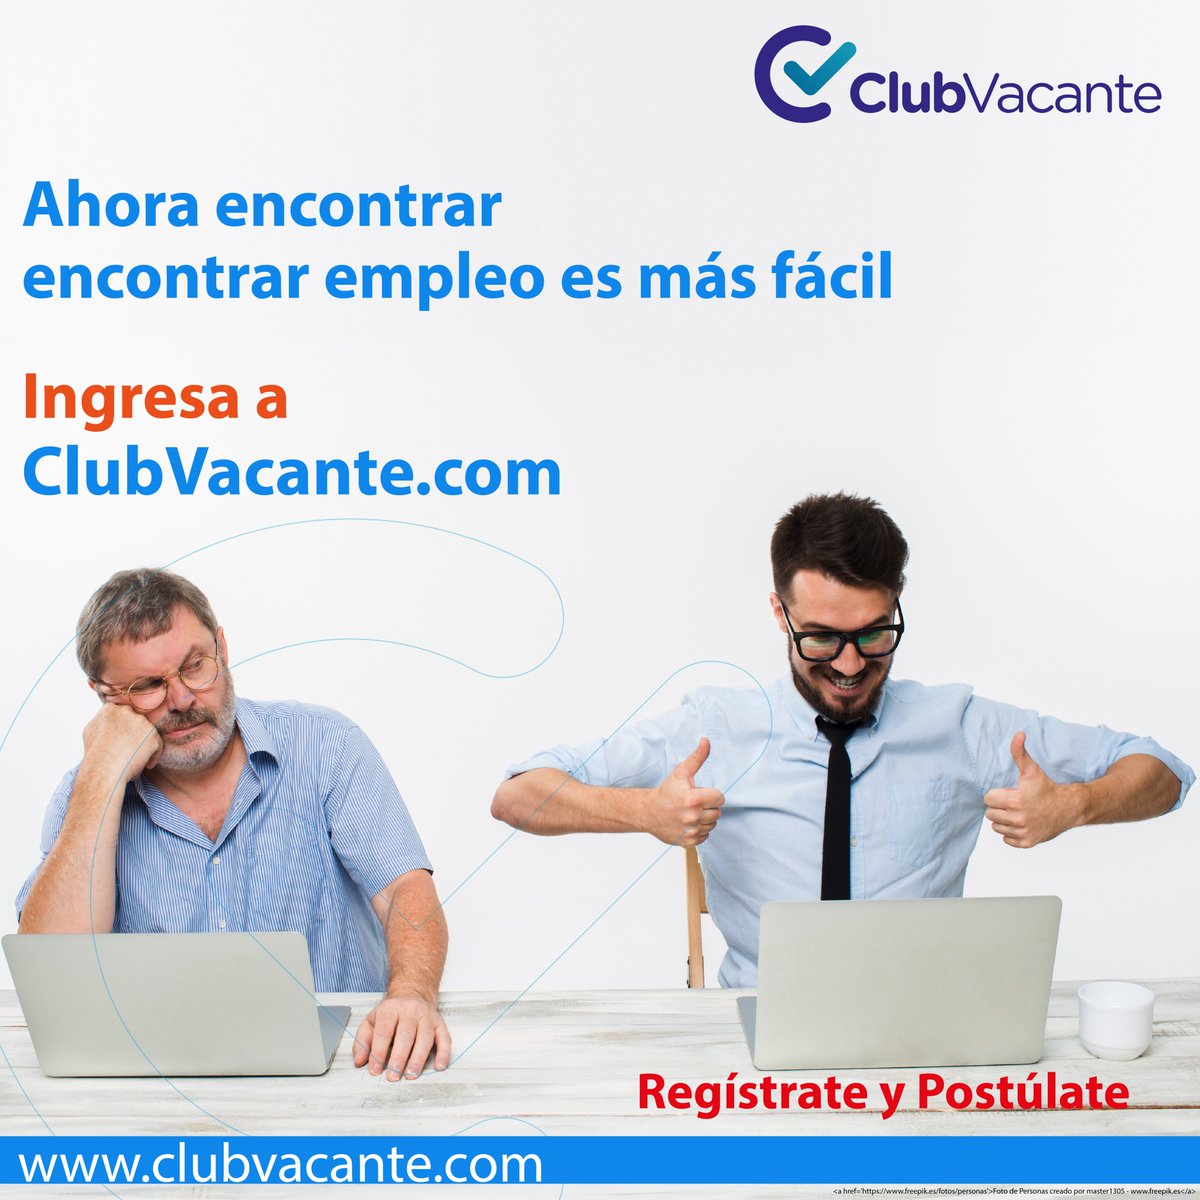 Club Vacante (@ClubVacante) / Twitter